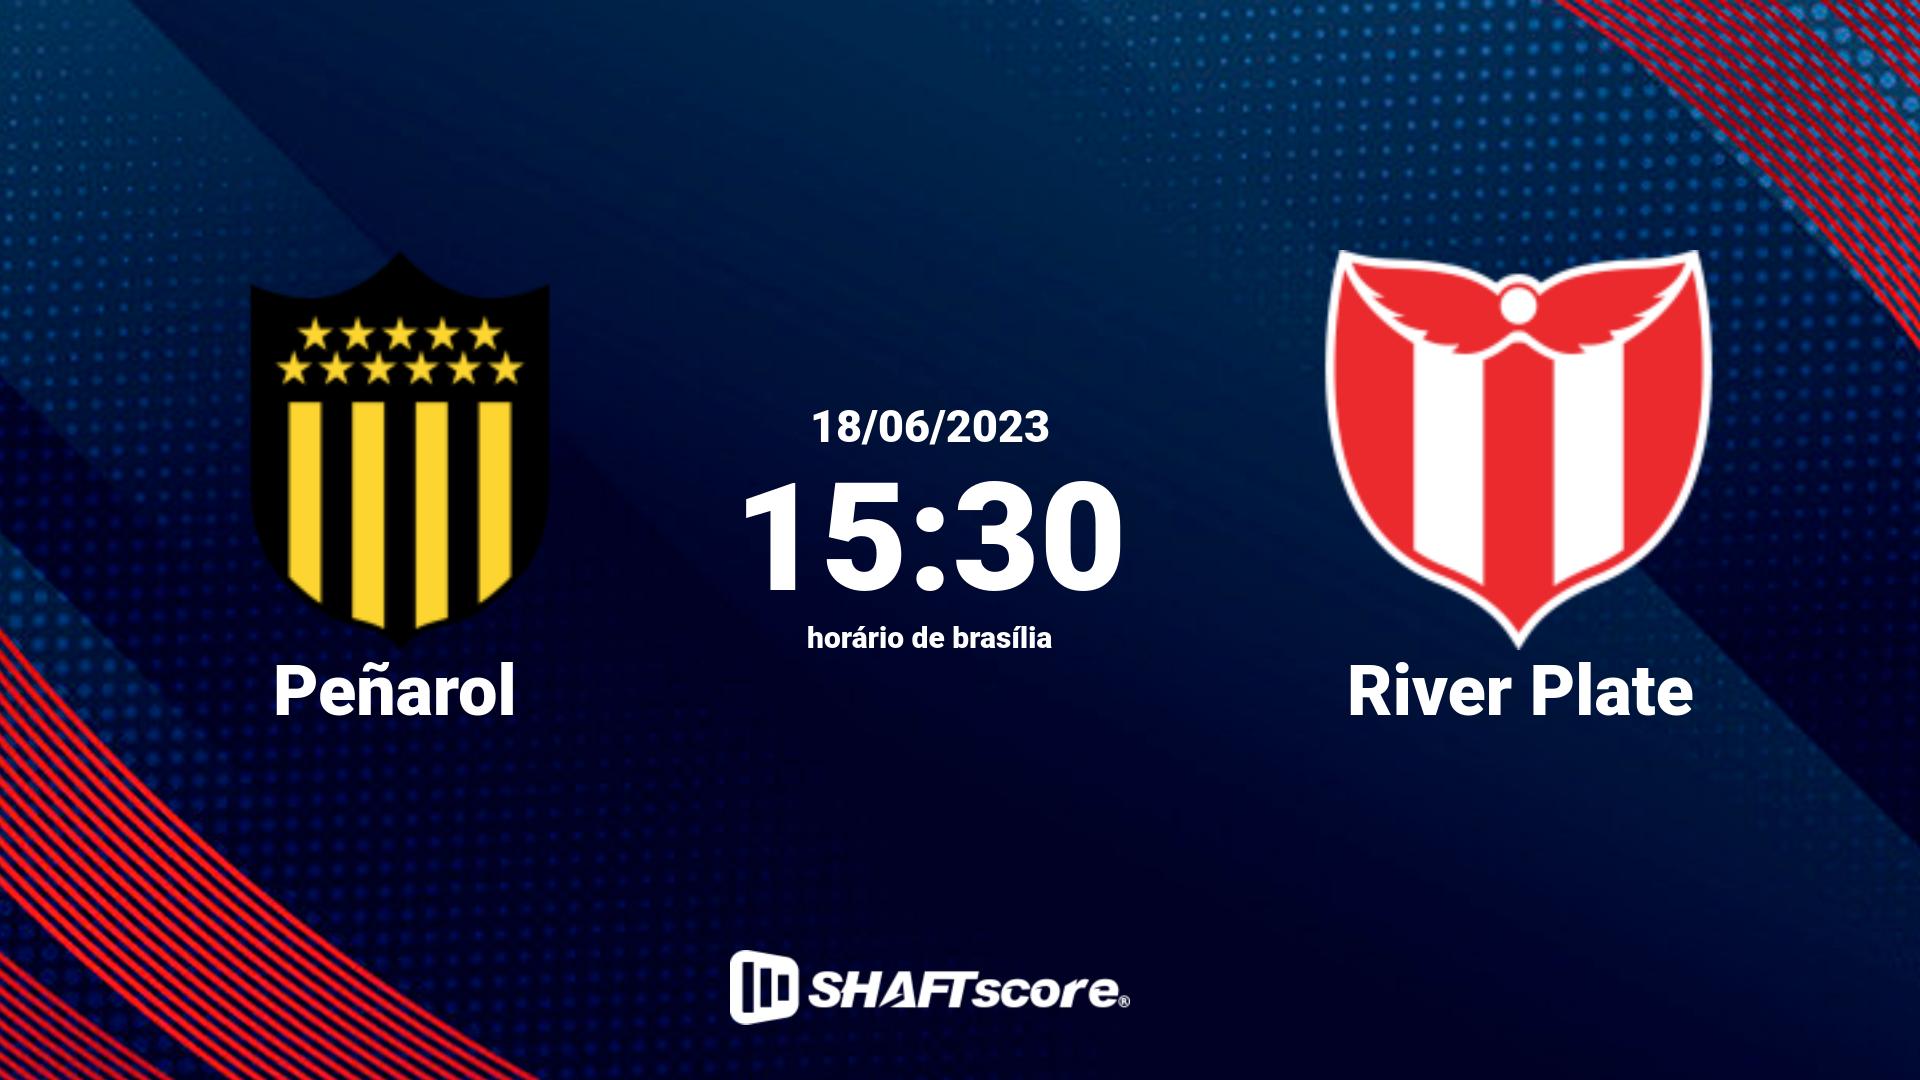 Estatísticas do jogo Peñarol vs River Plate 18.06 15:30